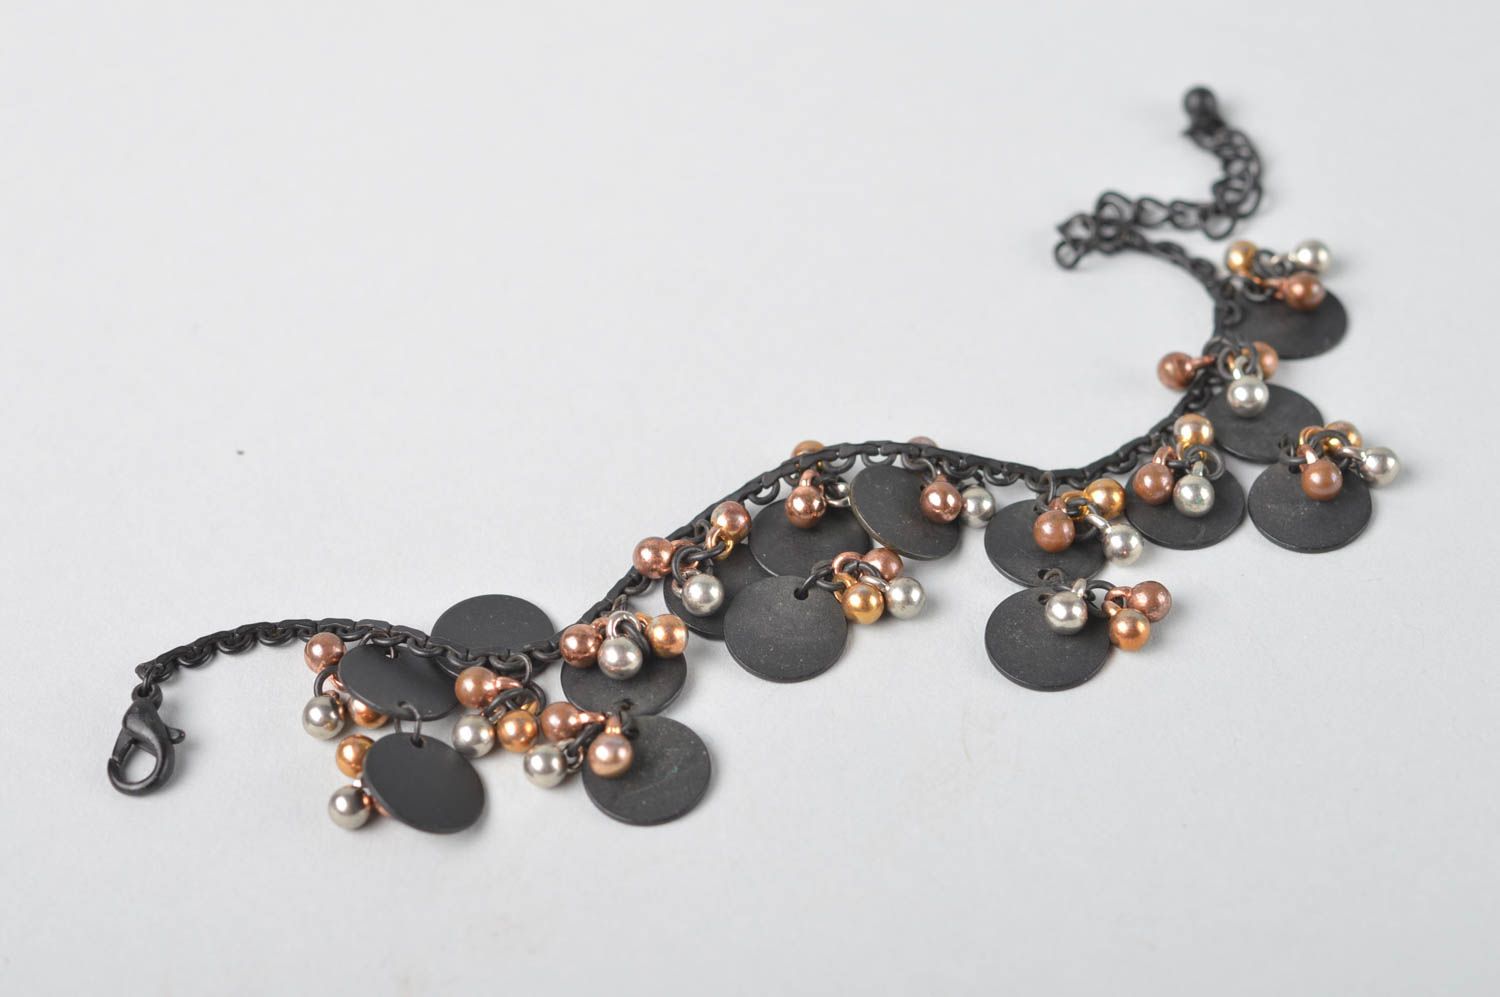 Handmade jewelry chain bracelet charm bracelet designer accessories gift ideas photo 2